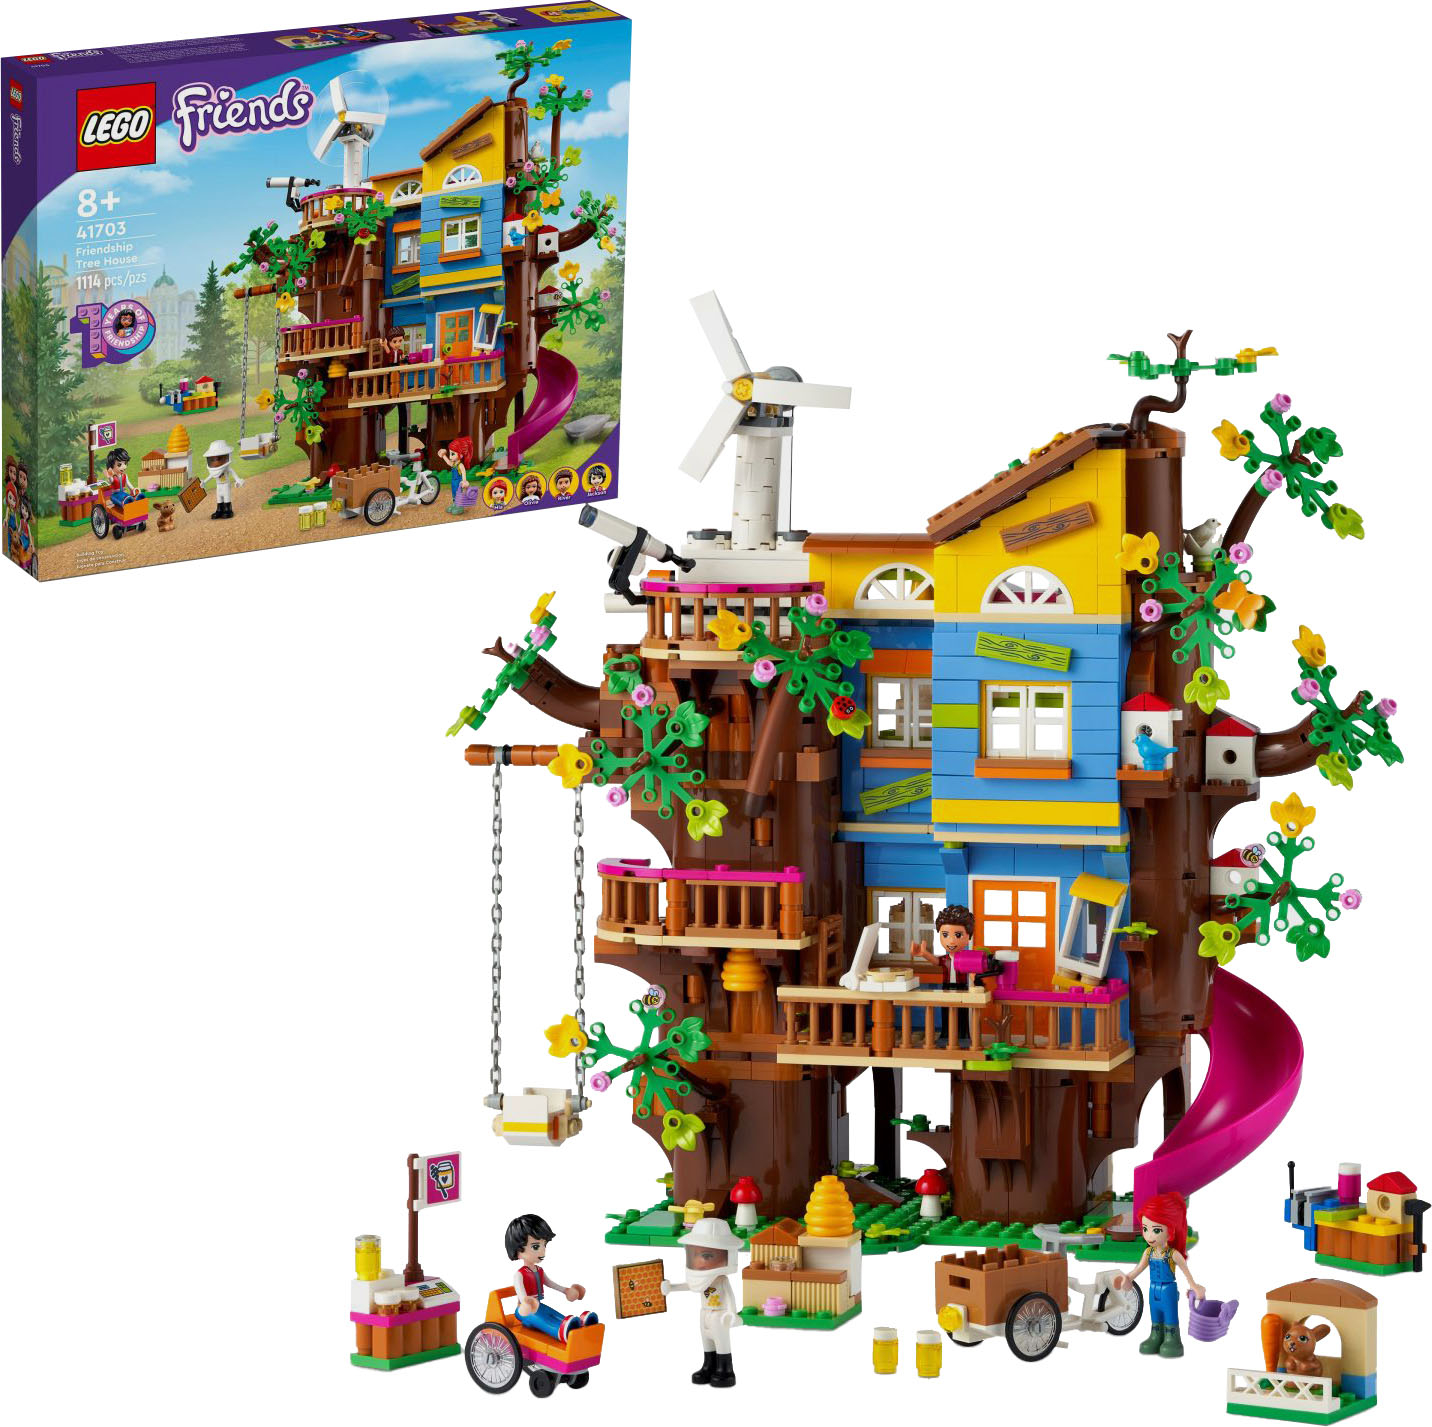 dyr Beskatning permeabilitet LEGO Friends Friendship Tree House 41703 6379083 - Best Buy